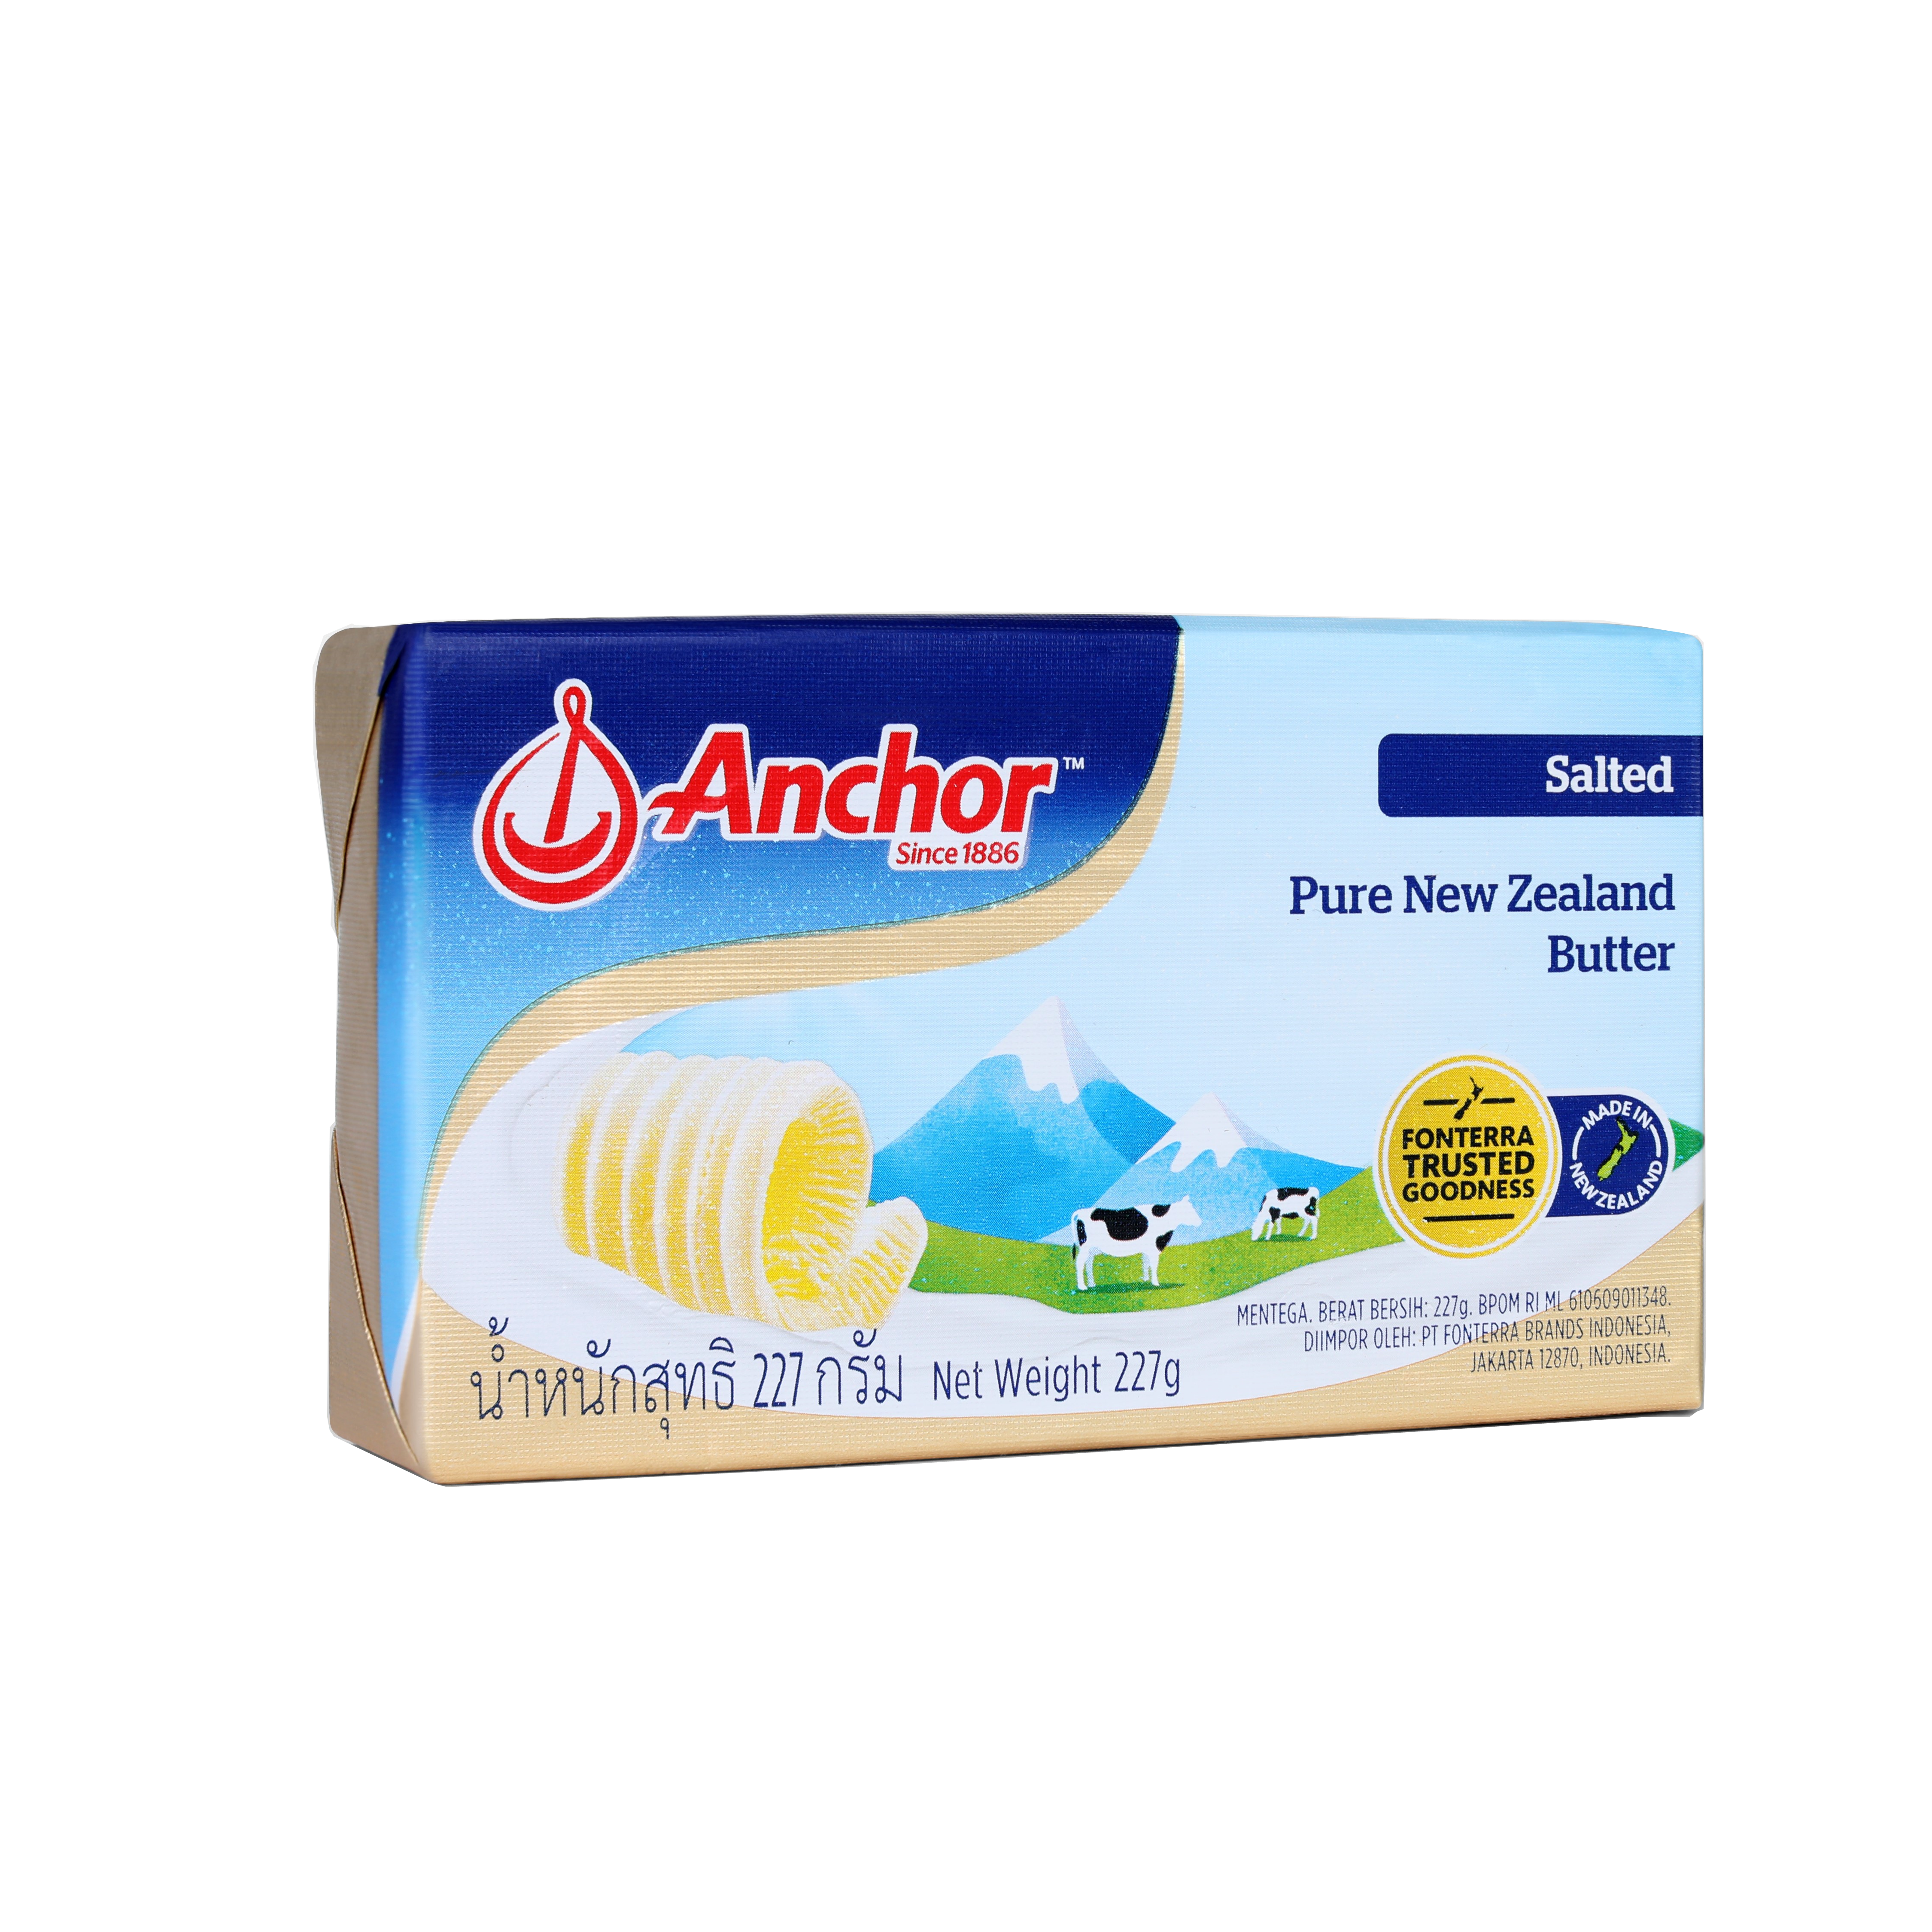 Anchor Pure New Zealand Butter Pats